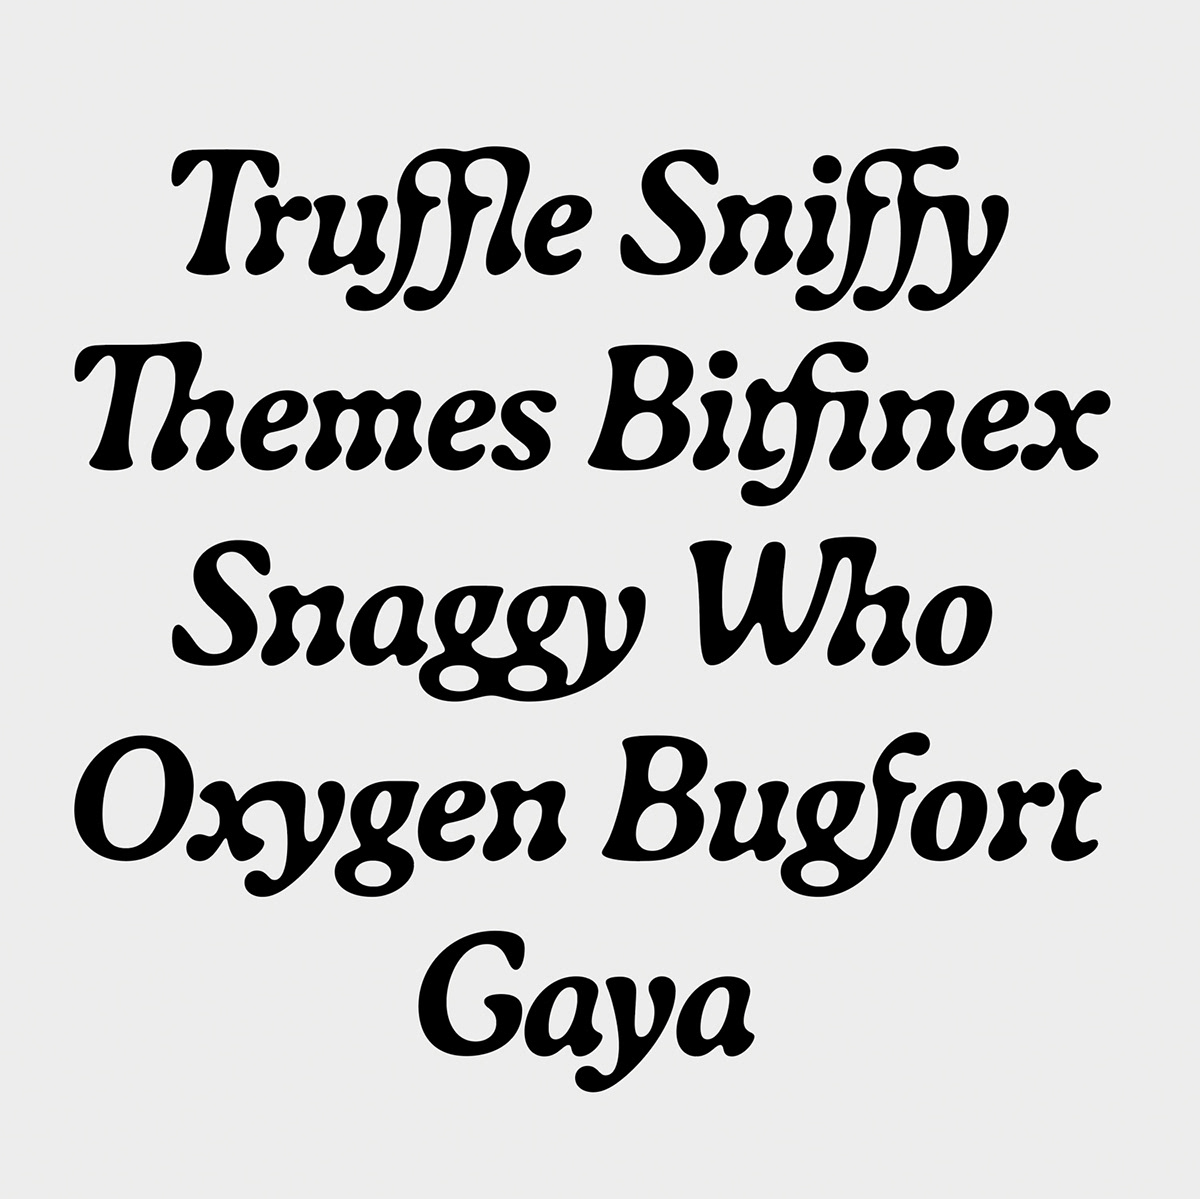 Display font foundry modern outofthedarktypefaces serif specimen type design Typeface typography  